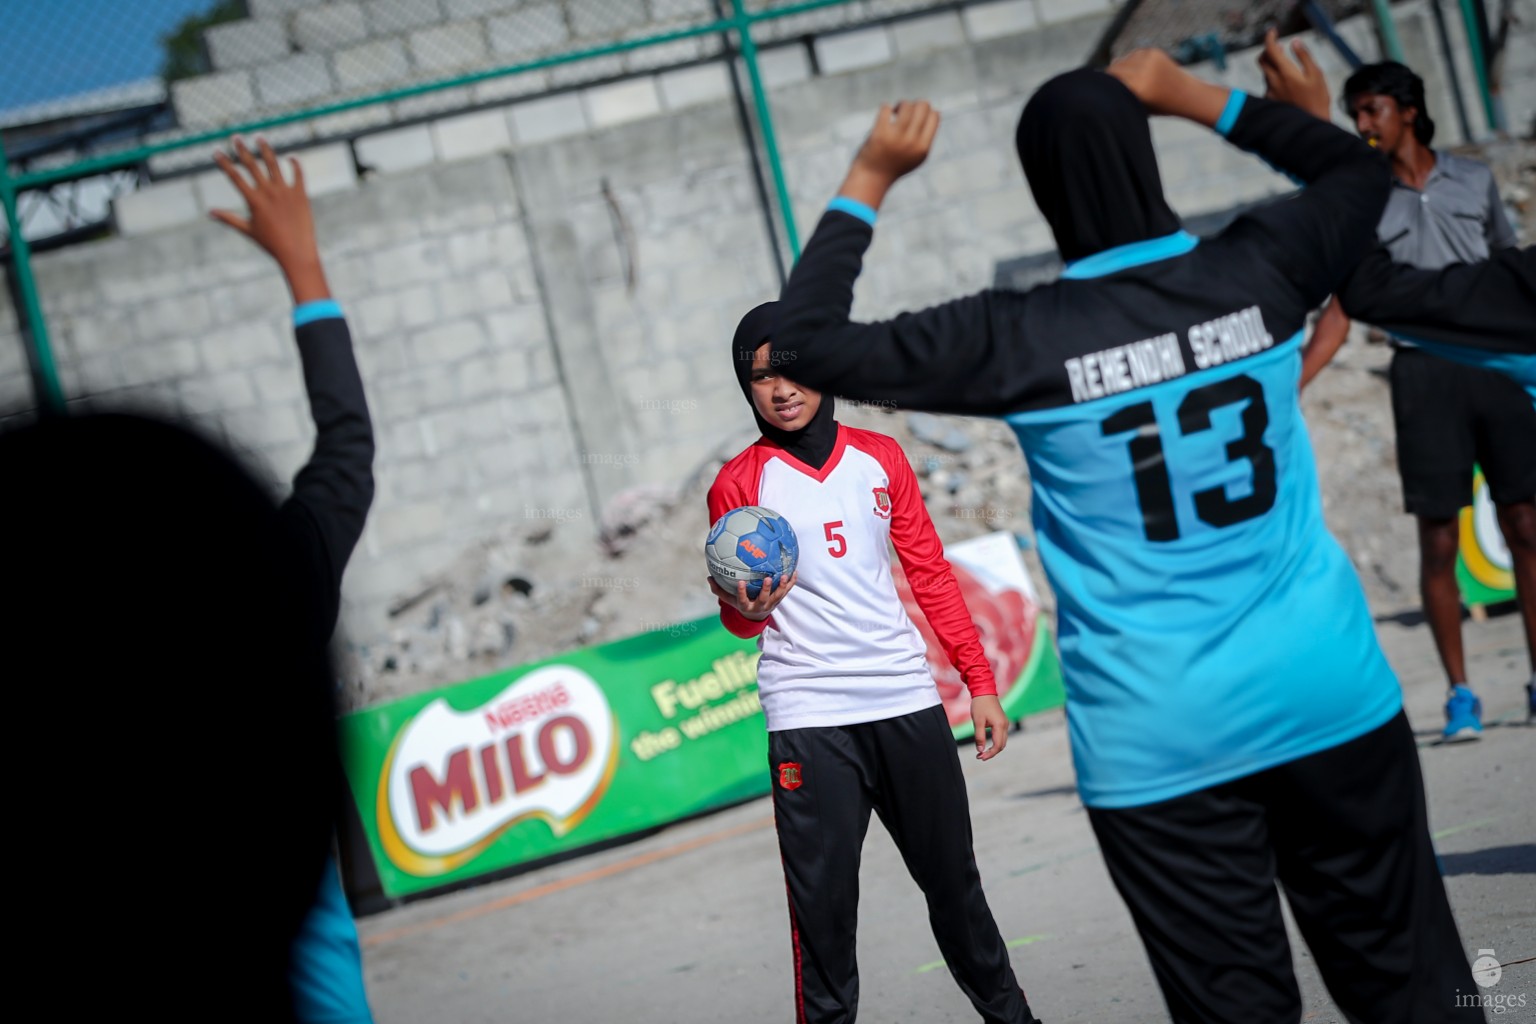 4th MILO Interschool Handball Tournament 2018